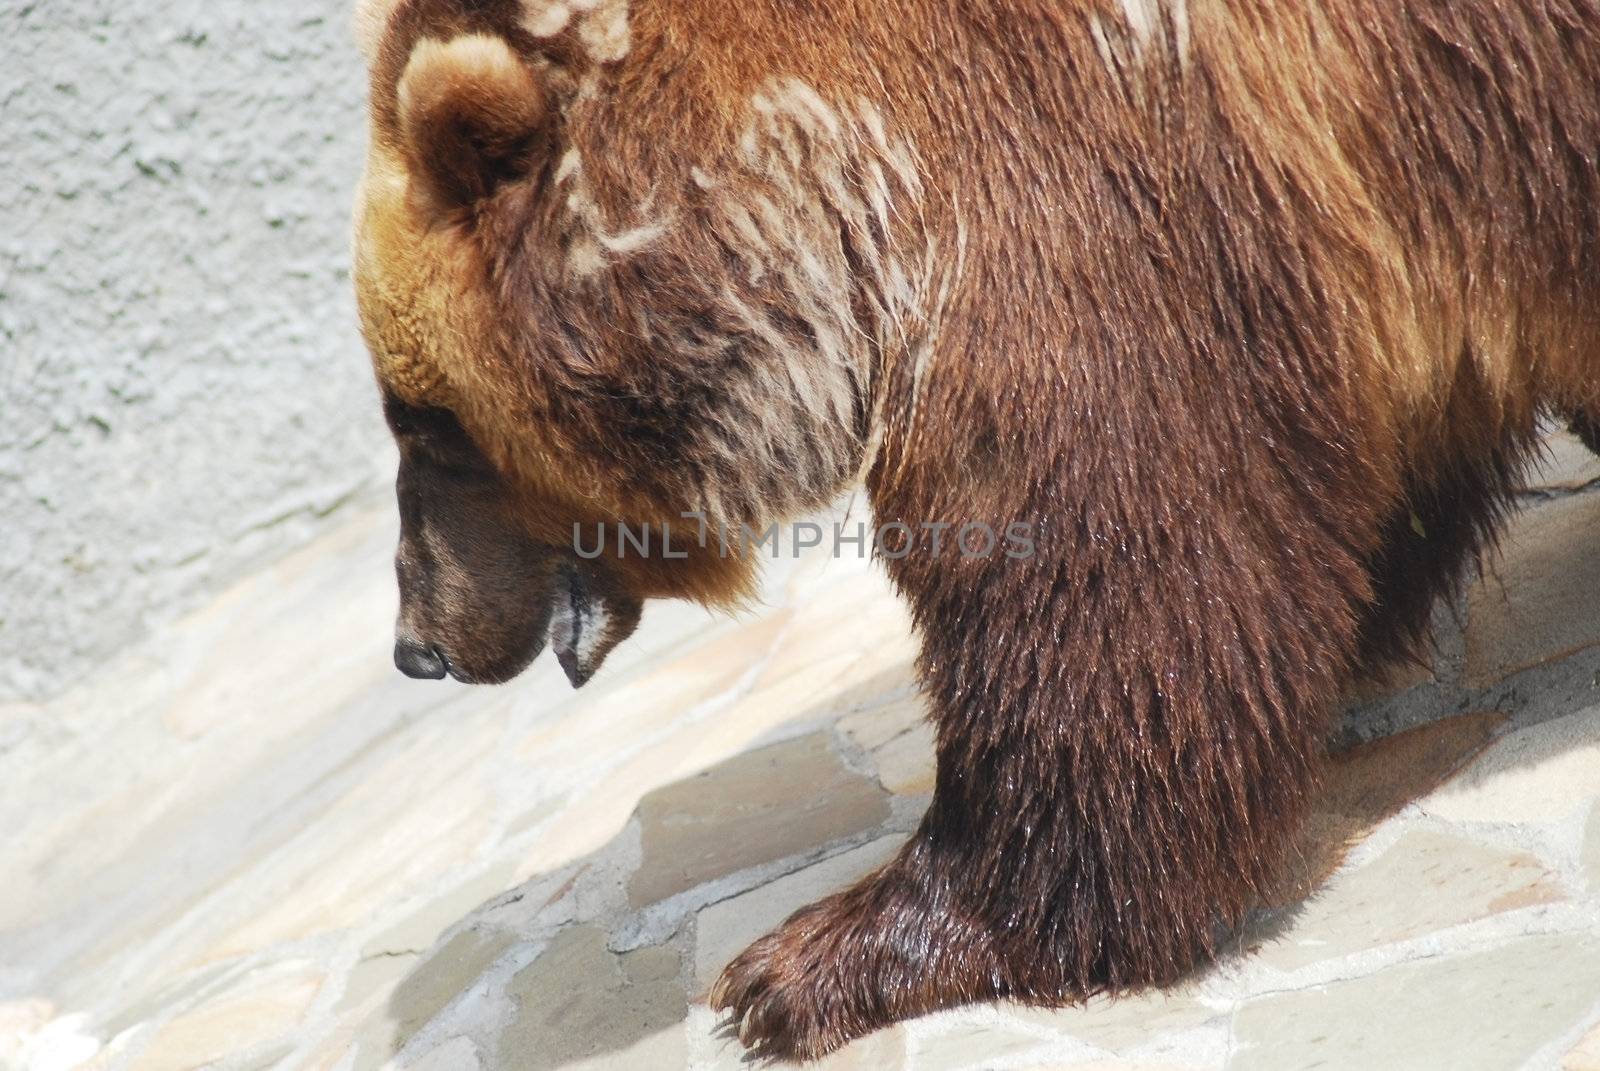 The brown bear close up, wild life 